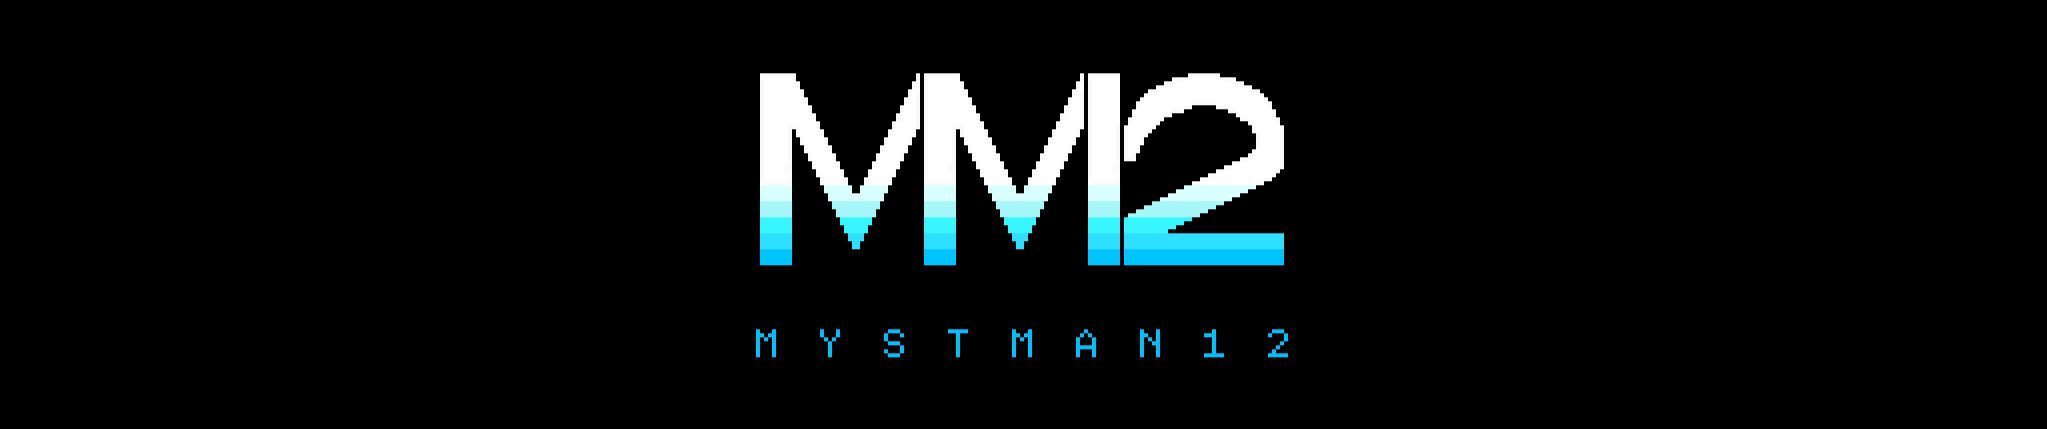 Mystman12 S Likes On Soundcloud Listen To Music